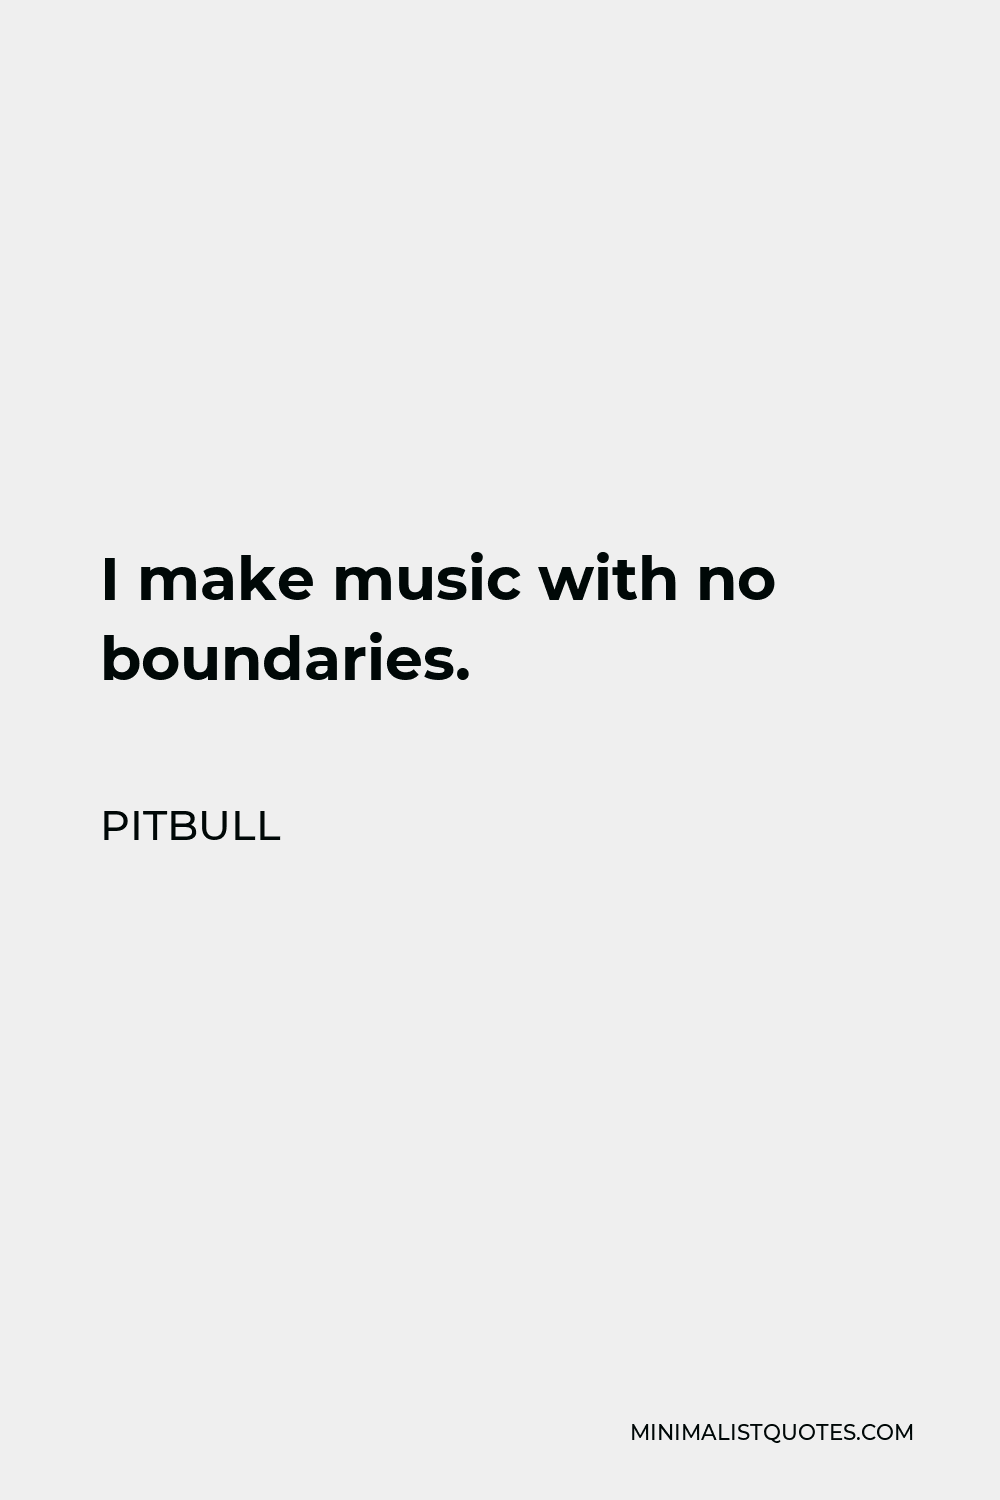 Pitbull Quote - I make music with no boundaries.